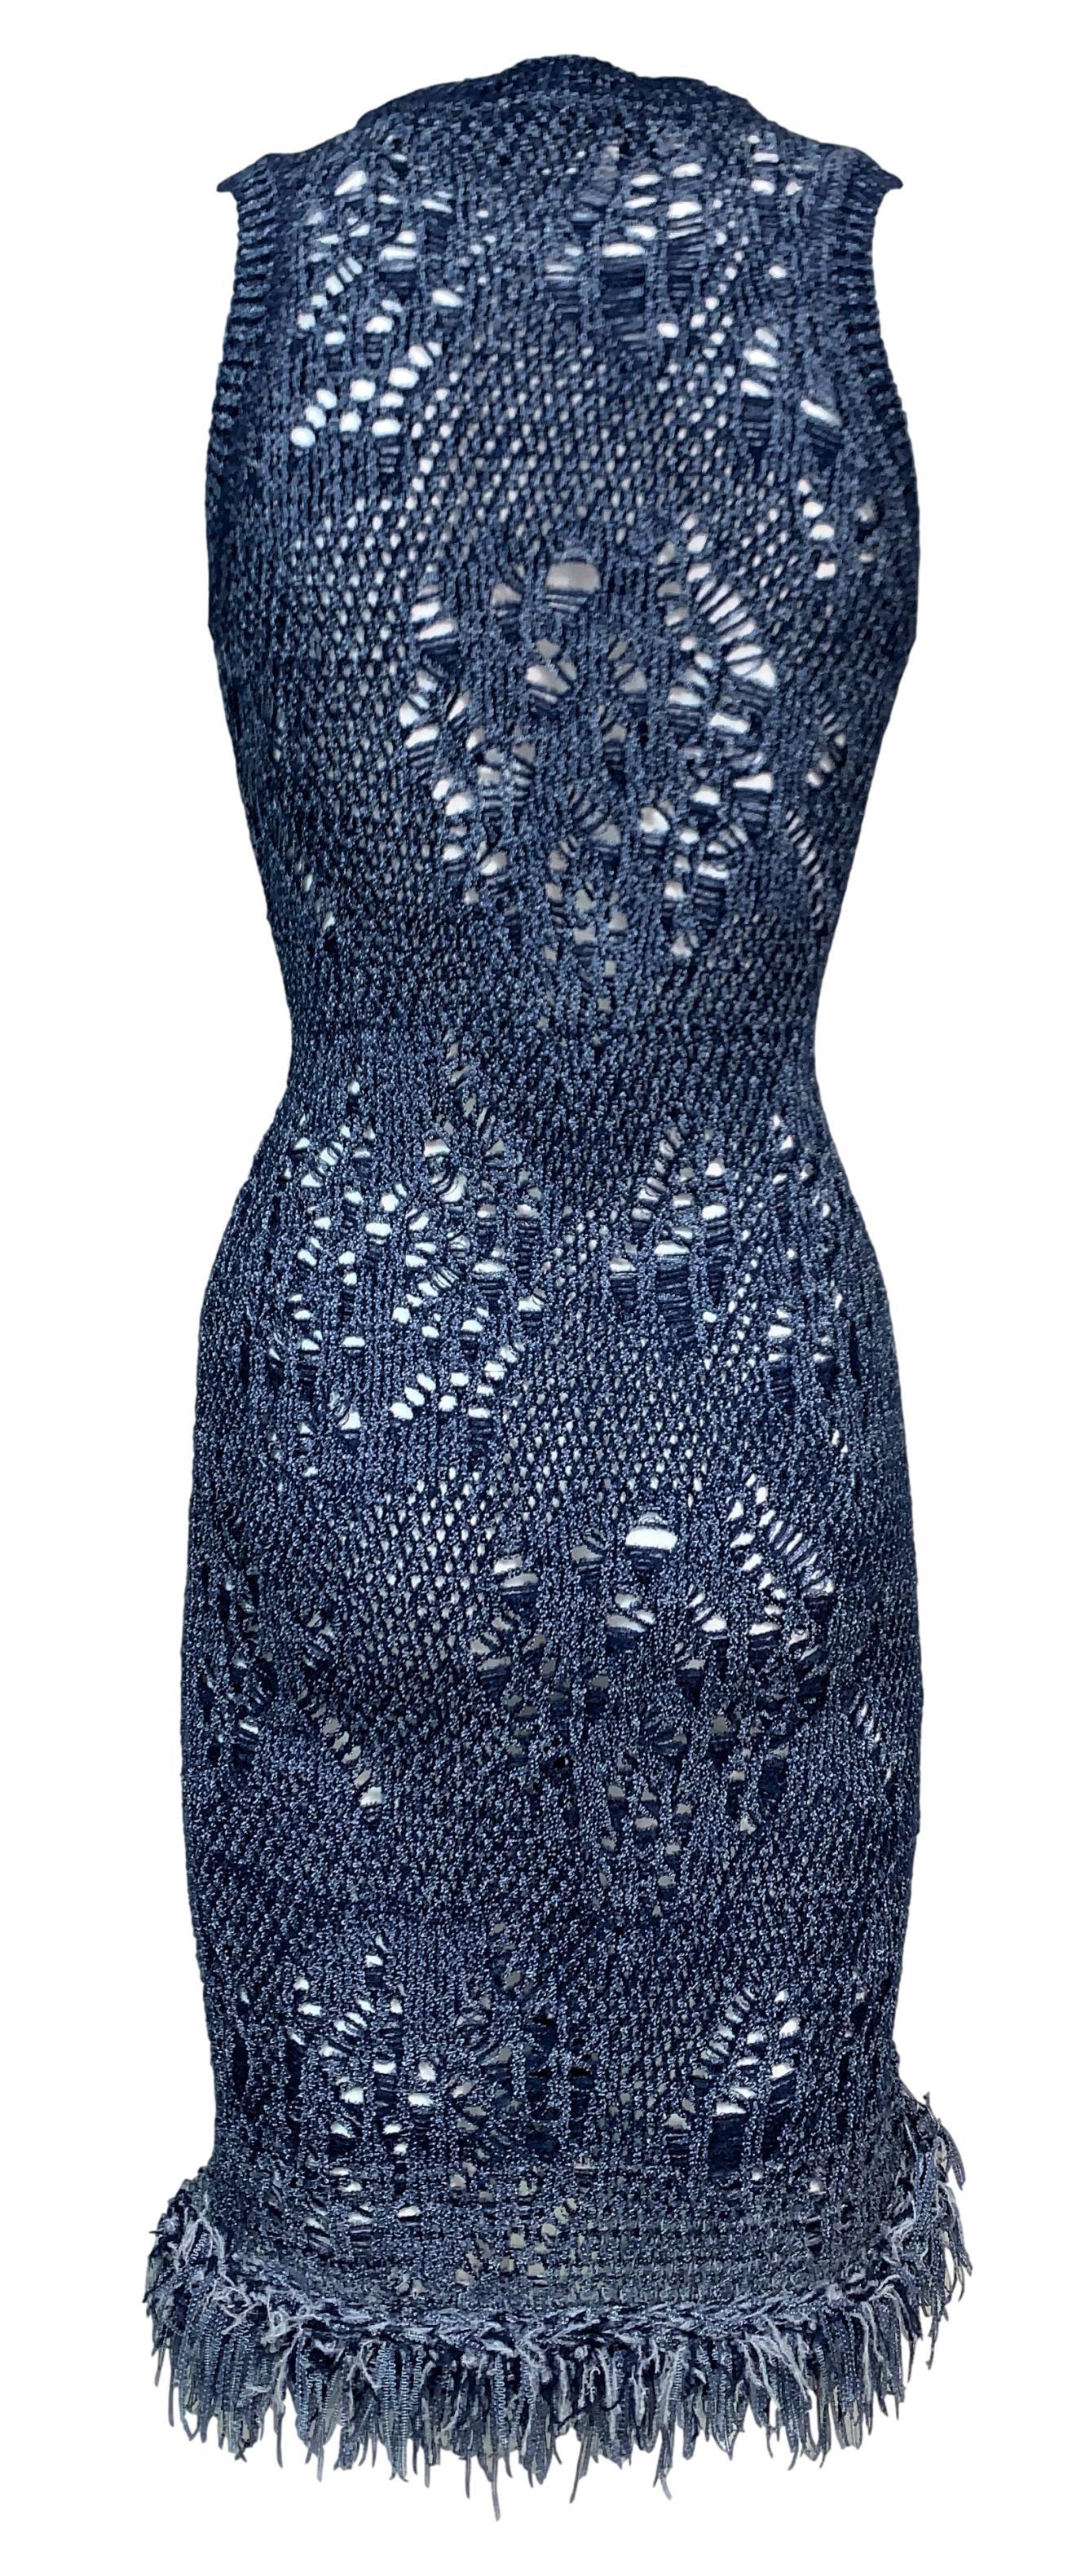 Women's S/S 2000 Christian Dior John Galliano Runway Sheer Blue Knit Dress & Jacket